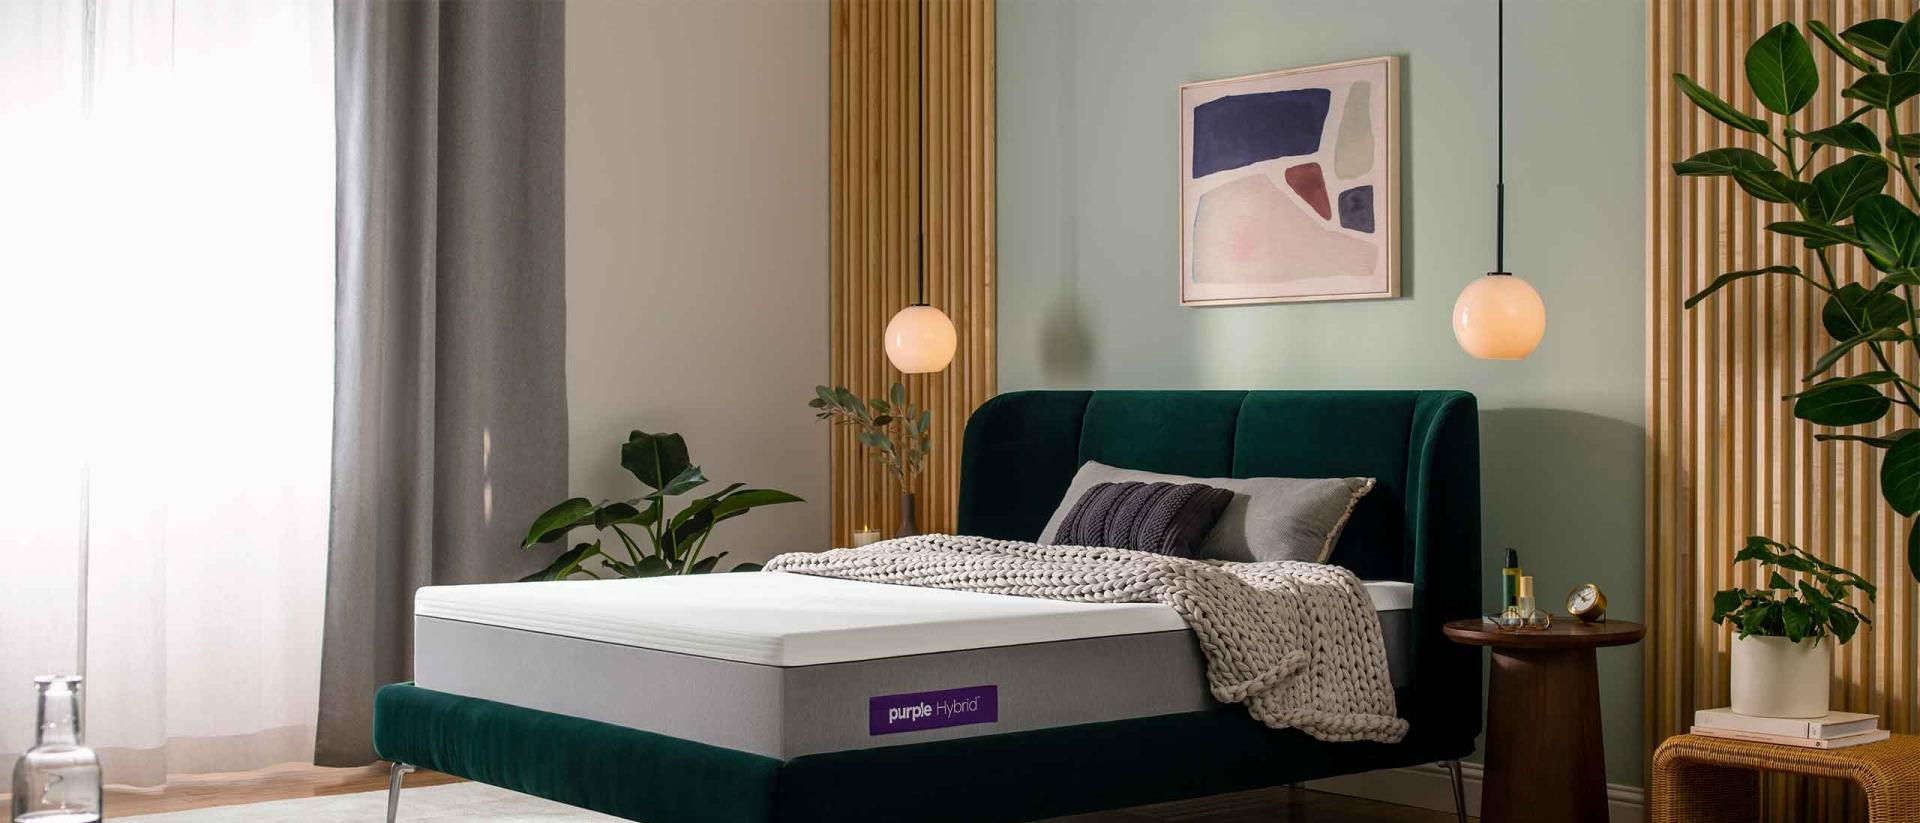 A Purple Hybrid mattress on a velvet green bed frame in a modern bedroom.